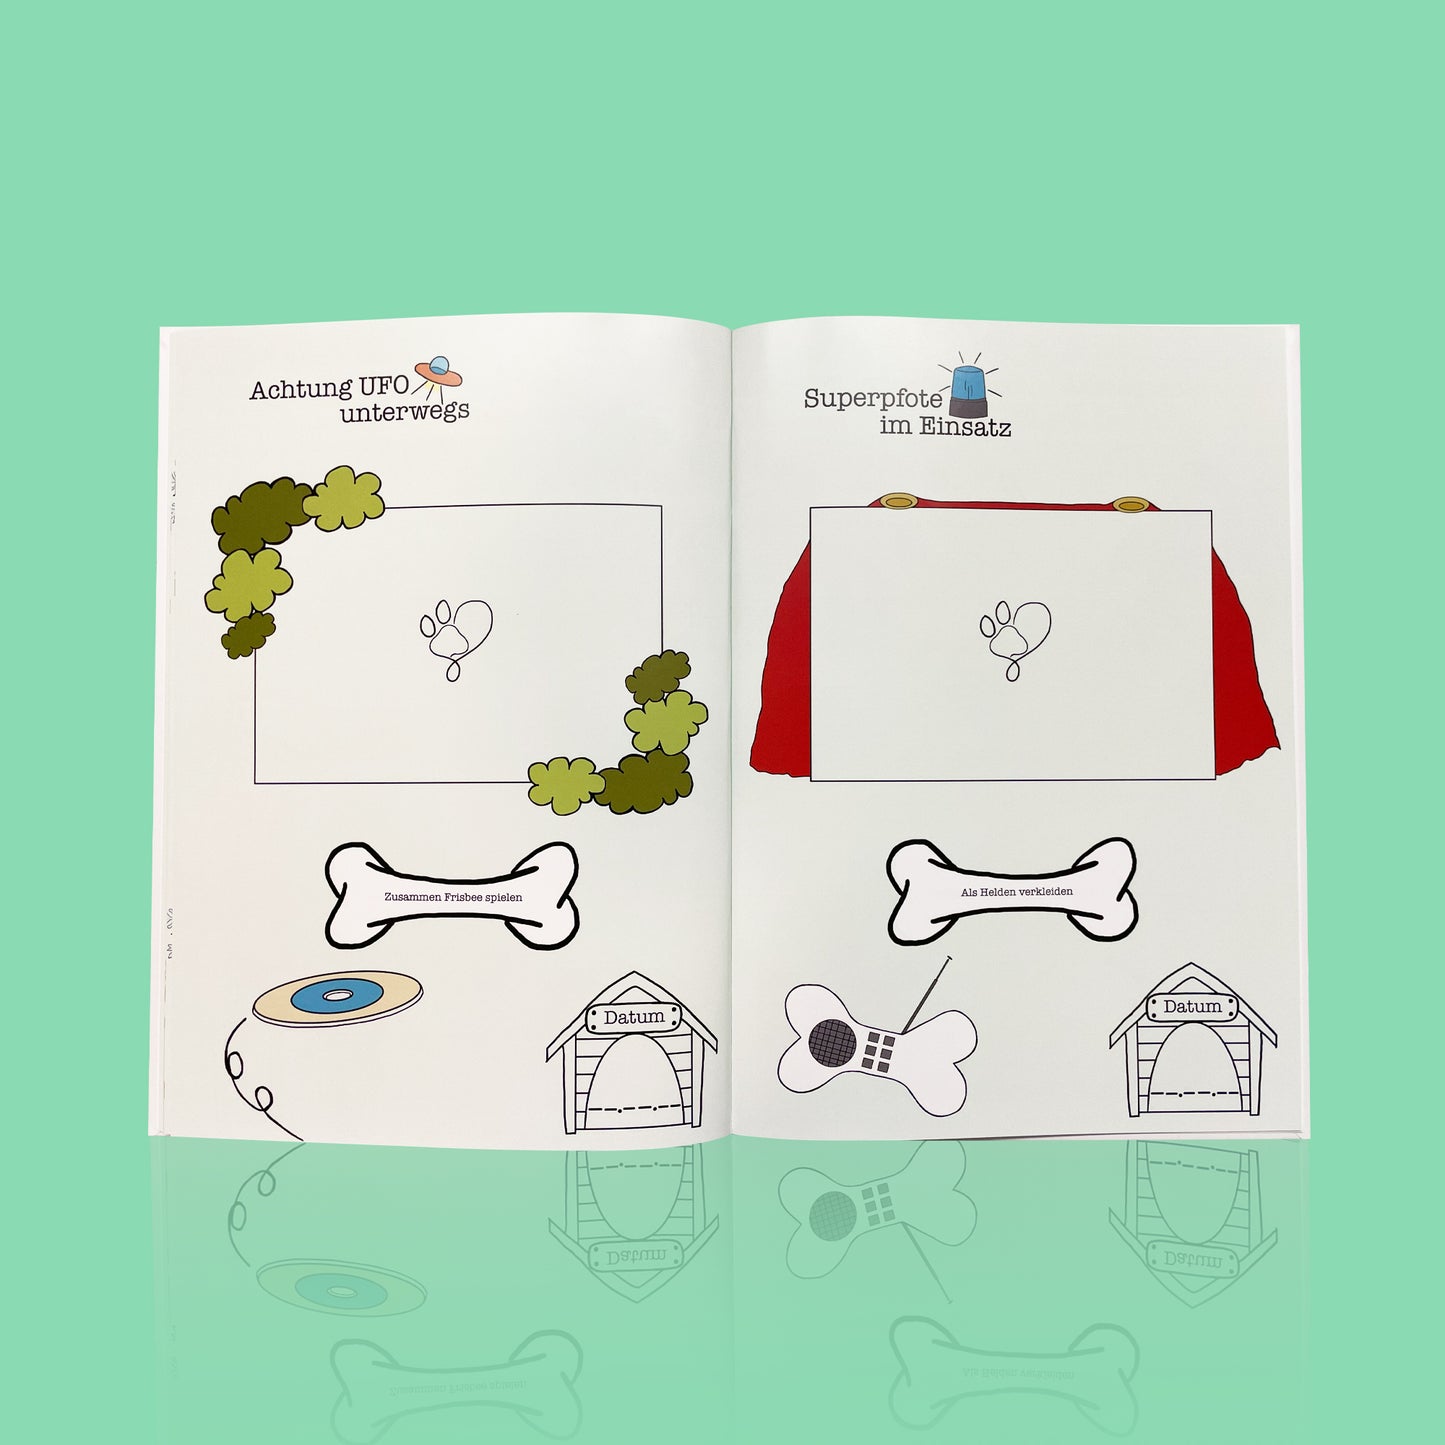 Dog Adventure Book